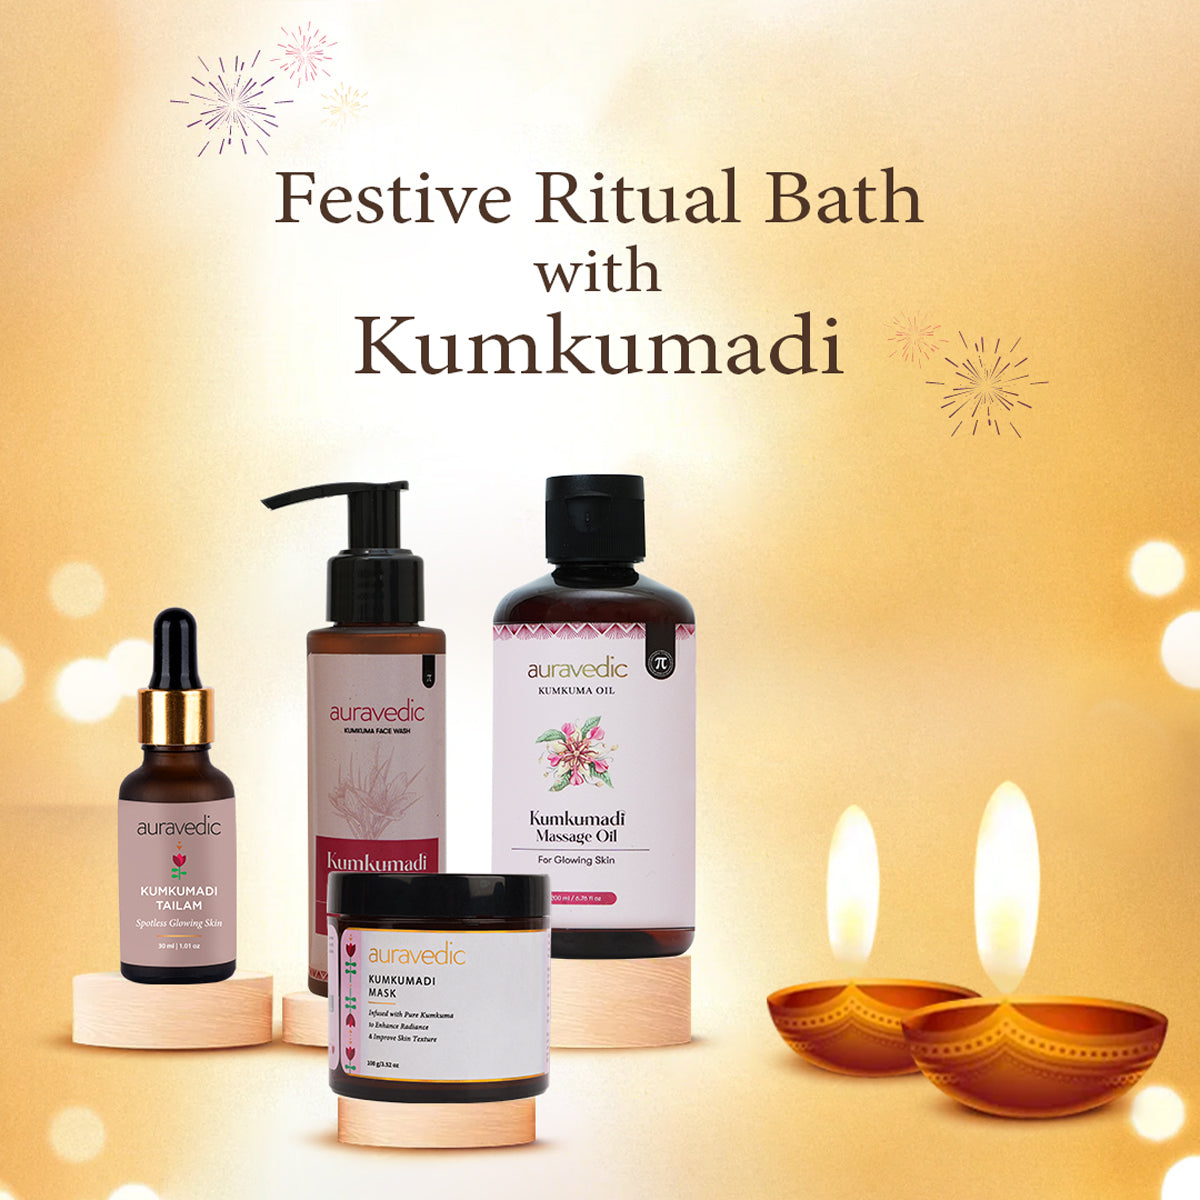 Festive Ritual Bath with Kumkumadi